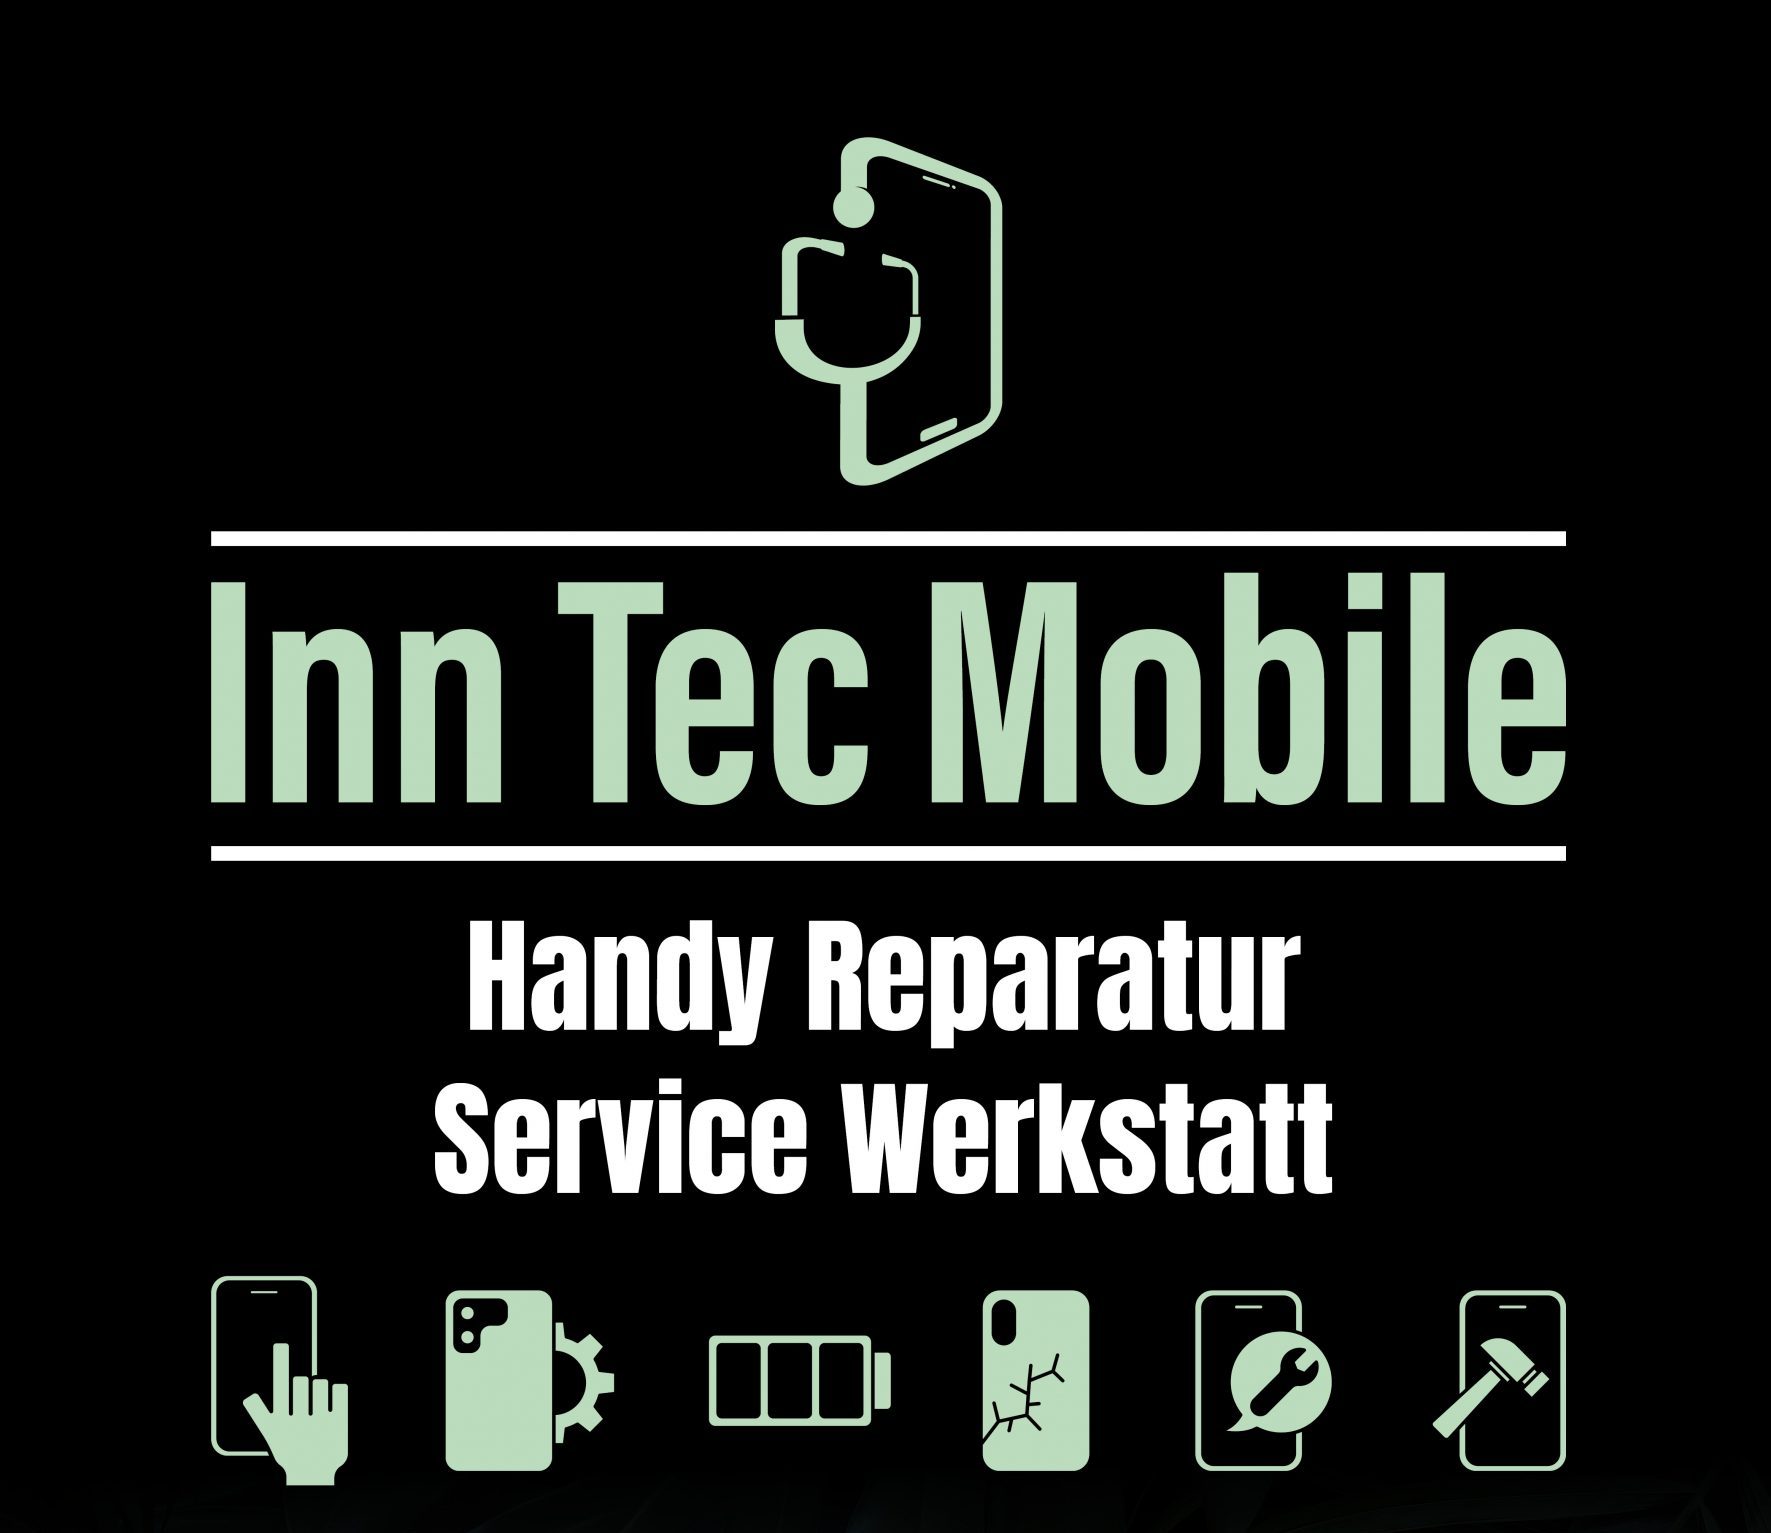 InnTec Mobile